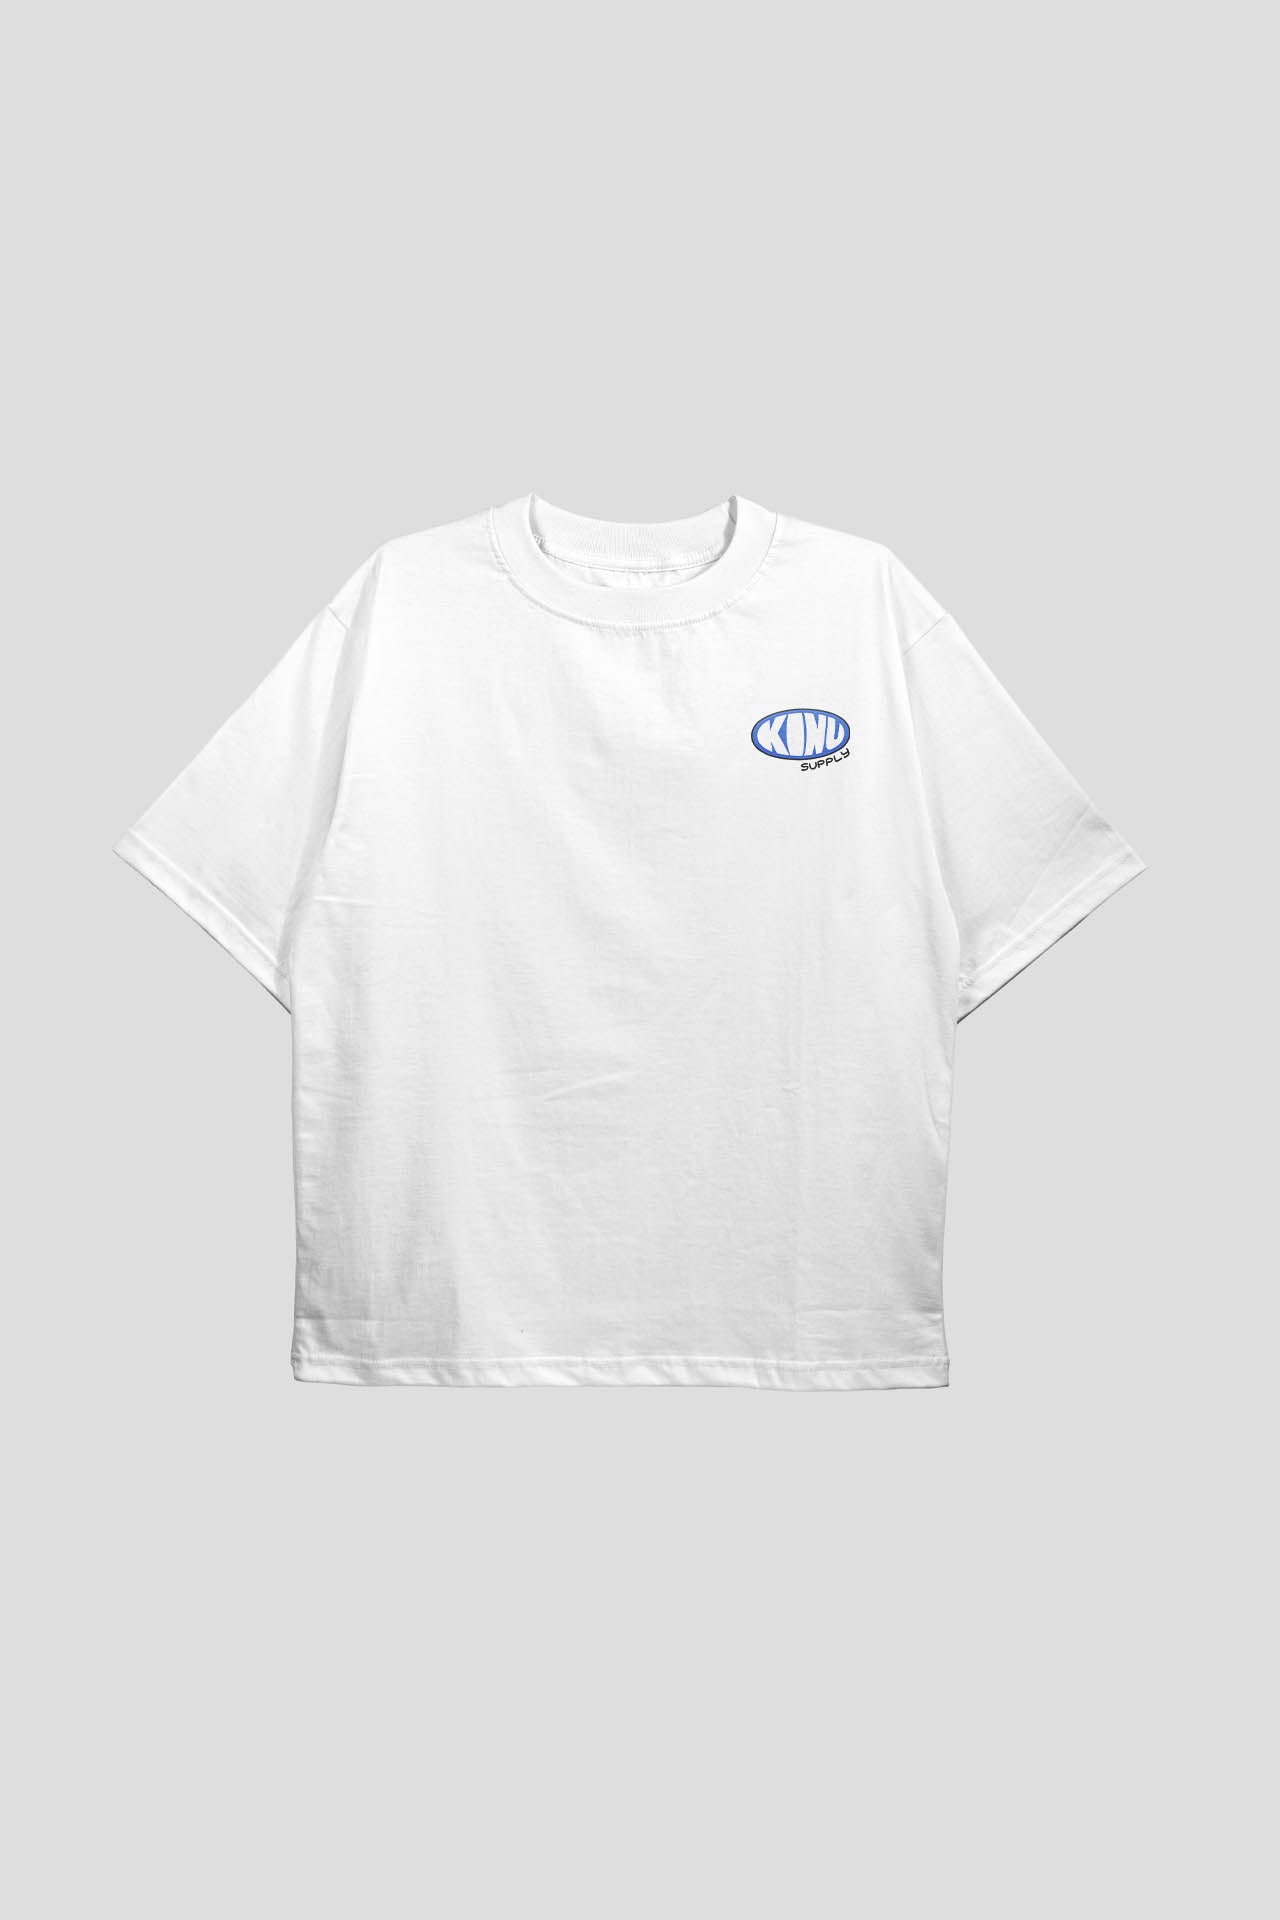 Lapdog Crew T-shirt White